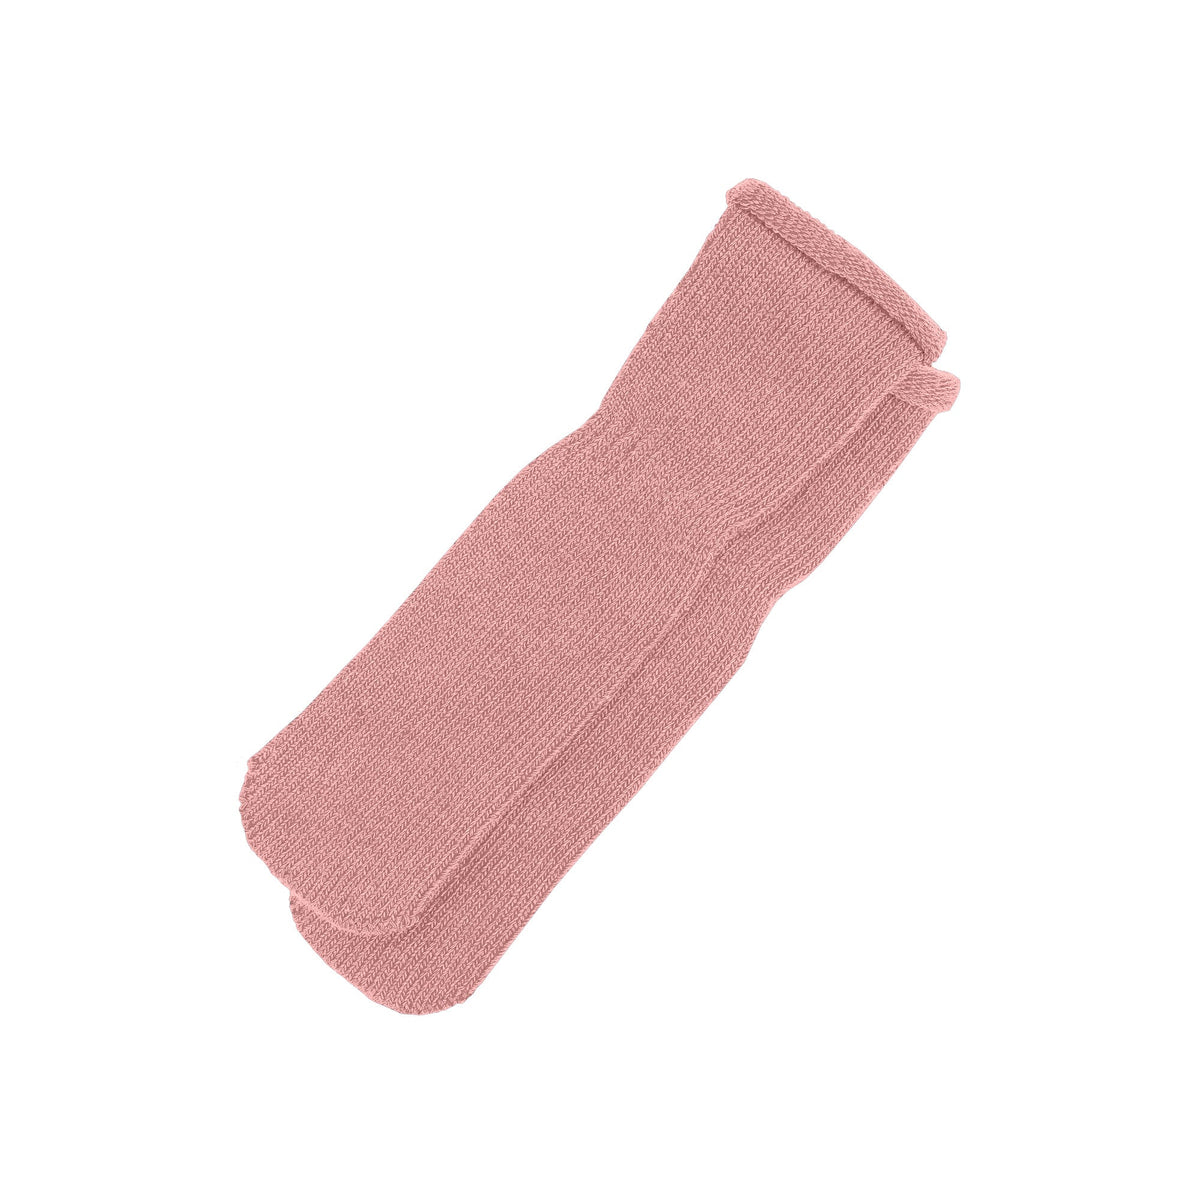 MENIQUE Knit Baby Socks Cotton